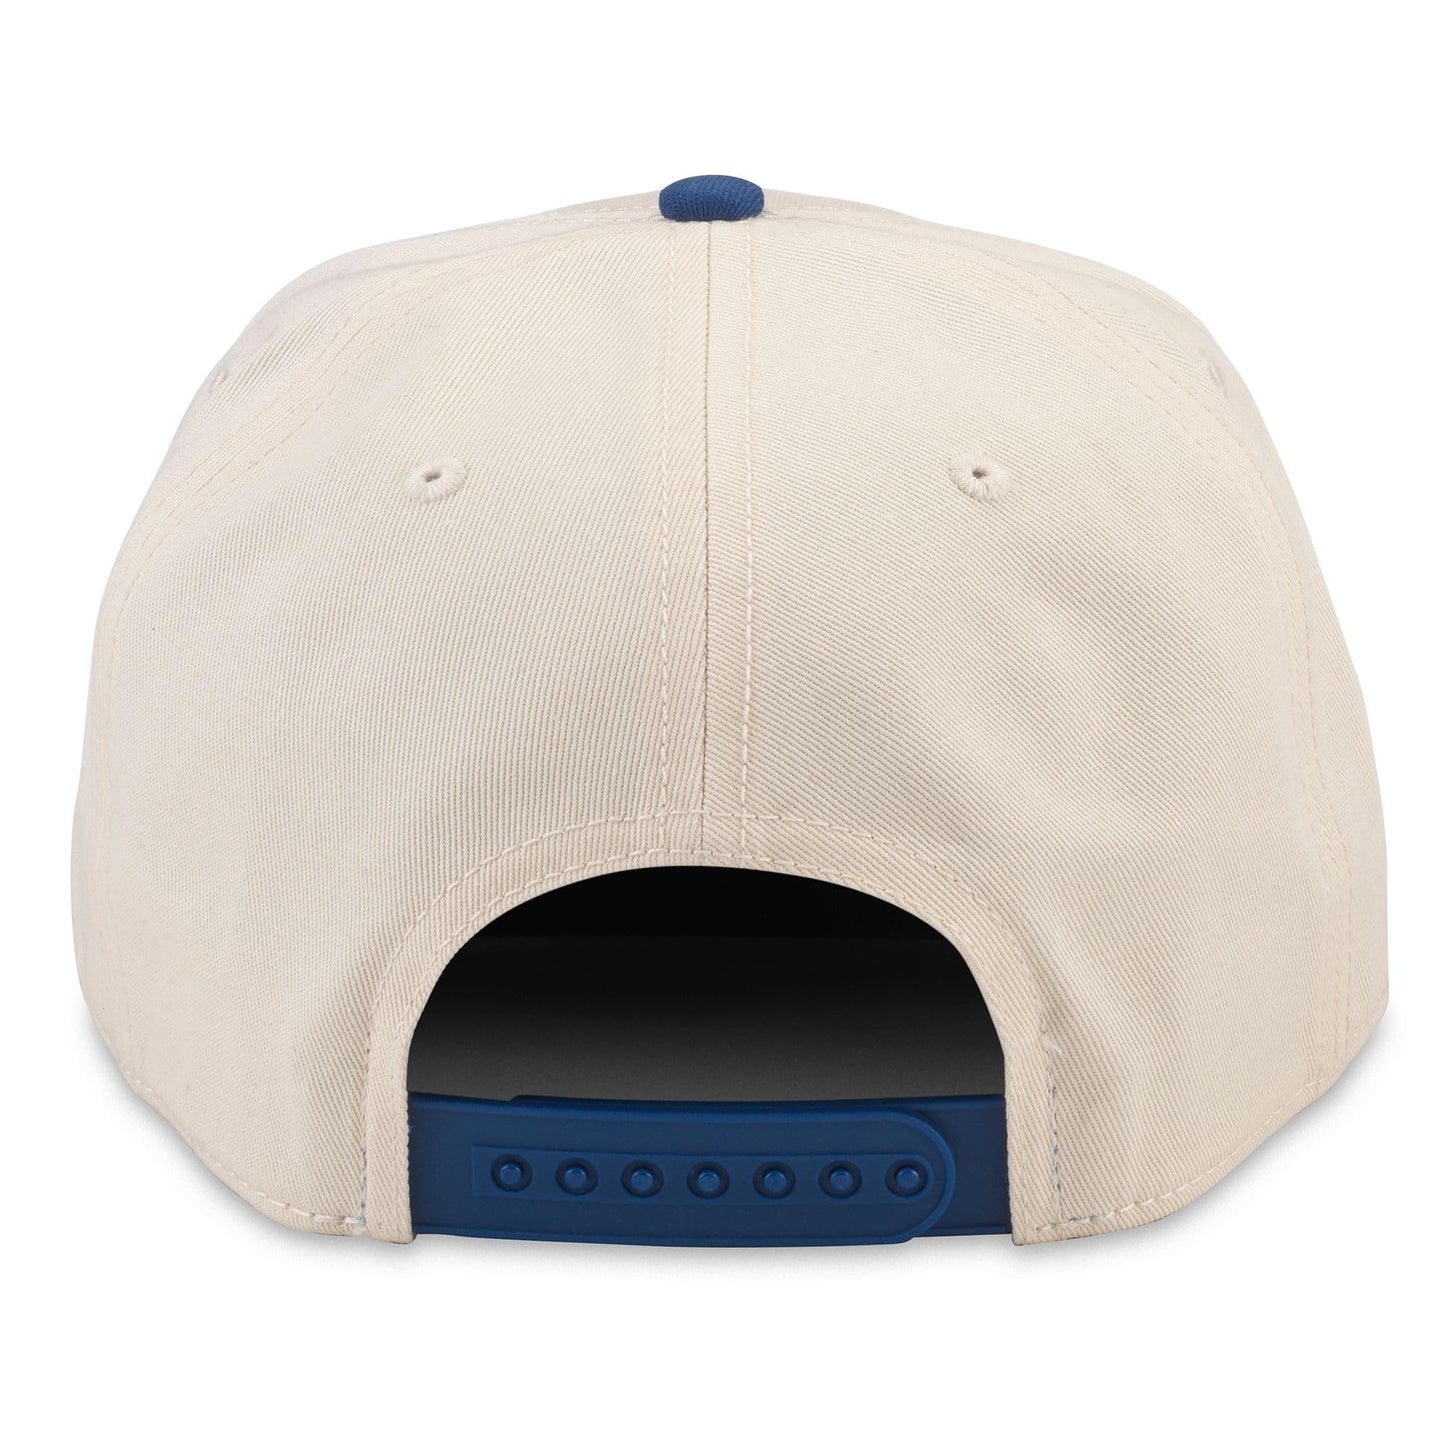 AMERICAN NEEDLE Willie Nelson Roscoe Adjustable Snapback Baseball Hat, Ivory/Royal (23008A-WNELSON-IROY)